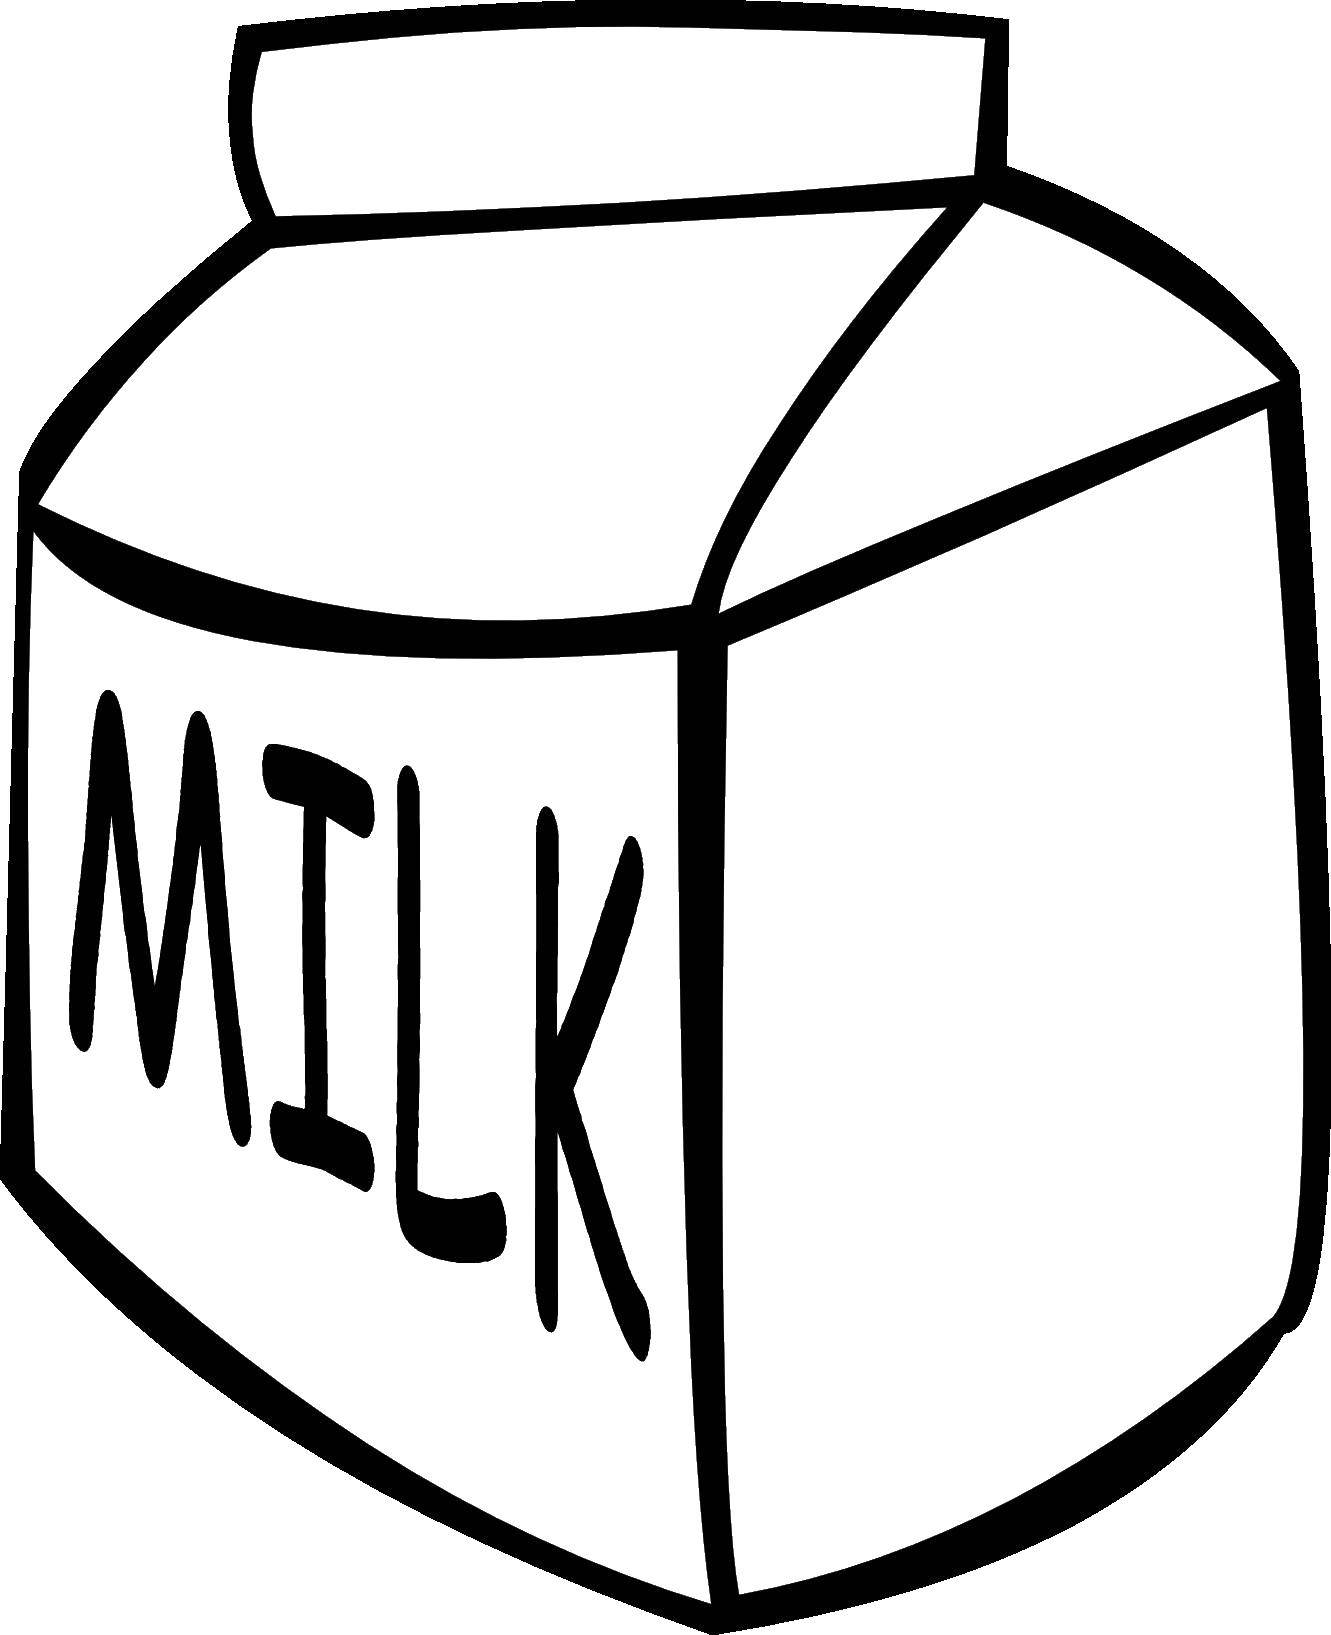 Название: Раскраска Пакет с молоком. Категория: Молоко. Теги: молоко, пакет.